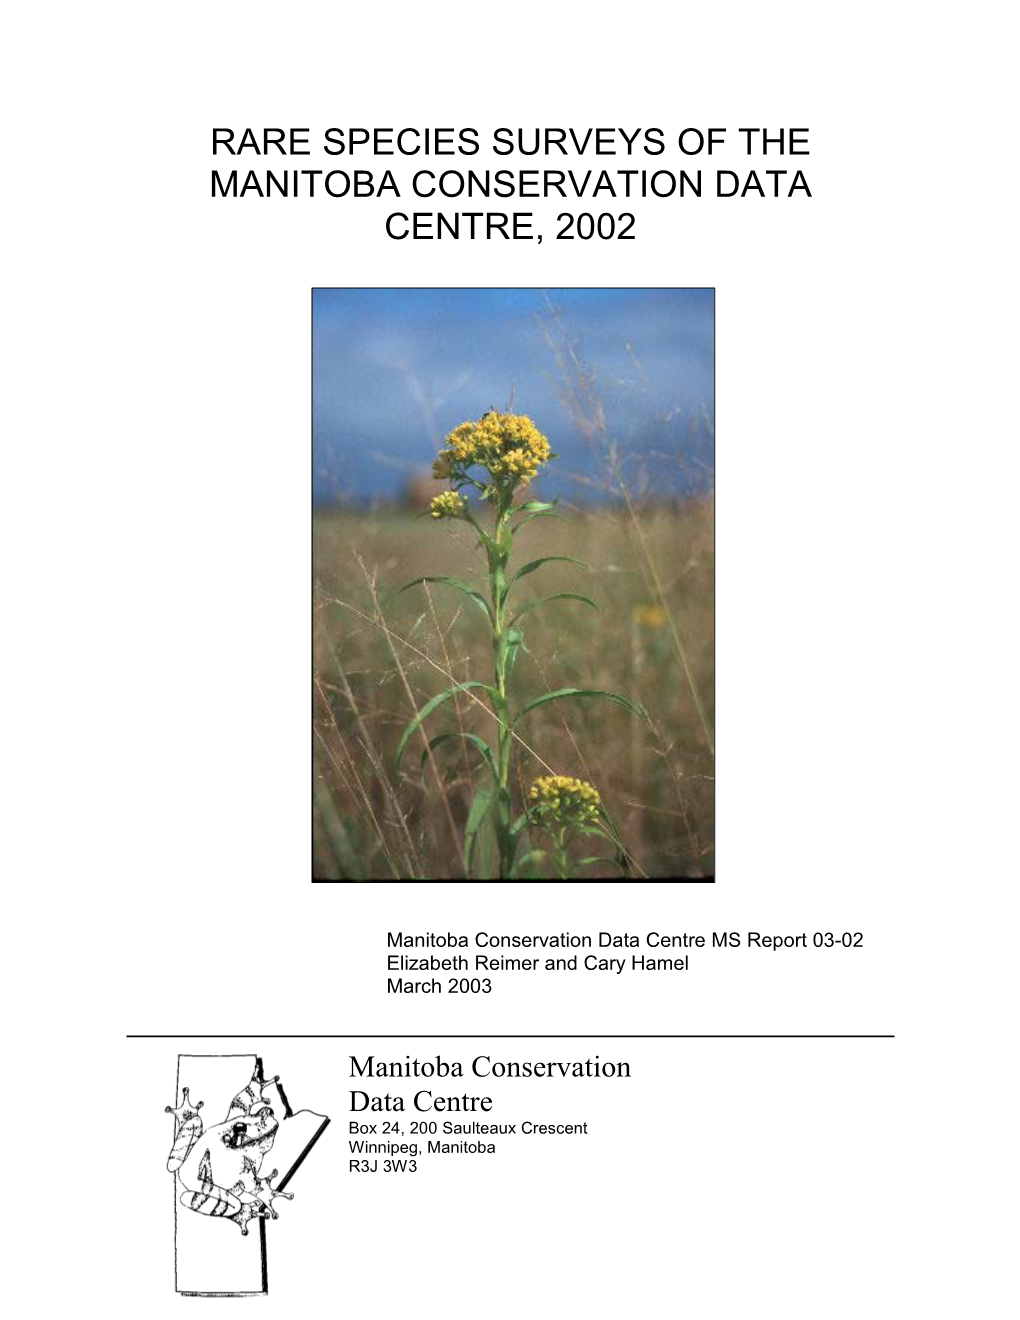 Rare Species Surveys of the Manitoba Conservation Data Centre, 2002